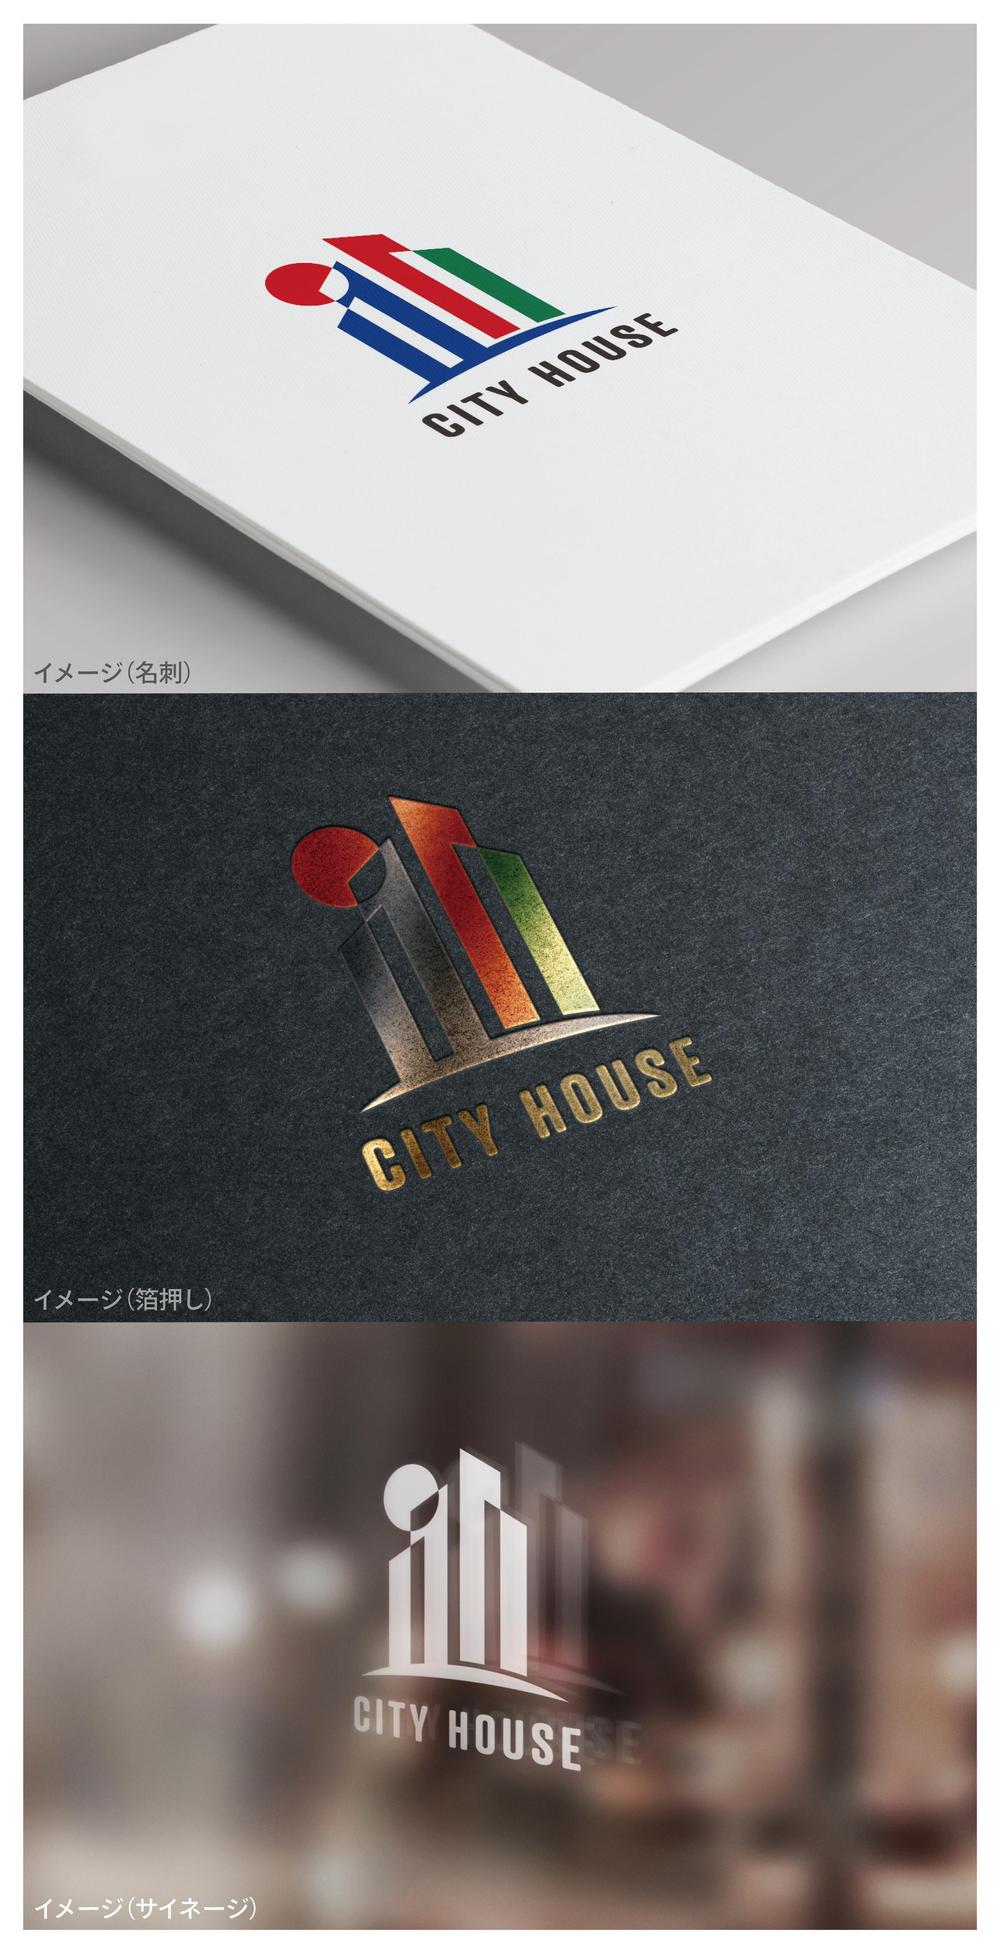 CITY HOUSE_logo01_01.jpg